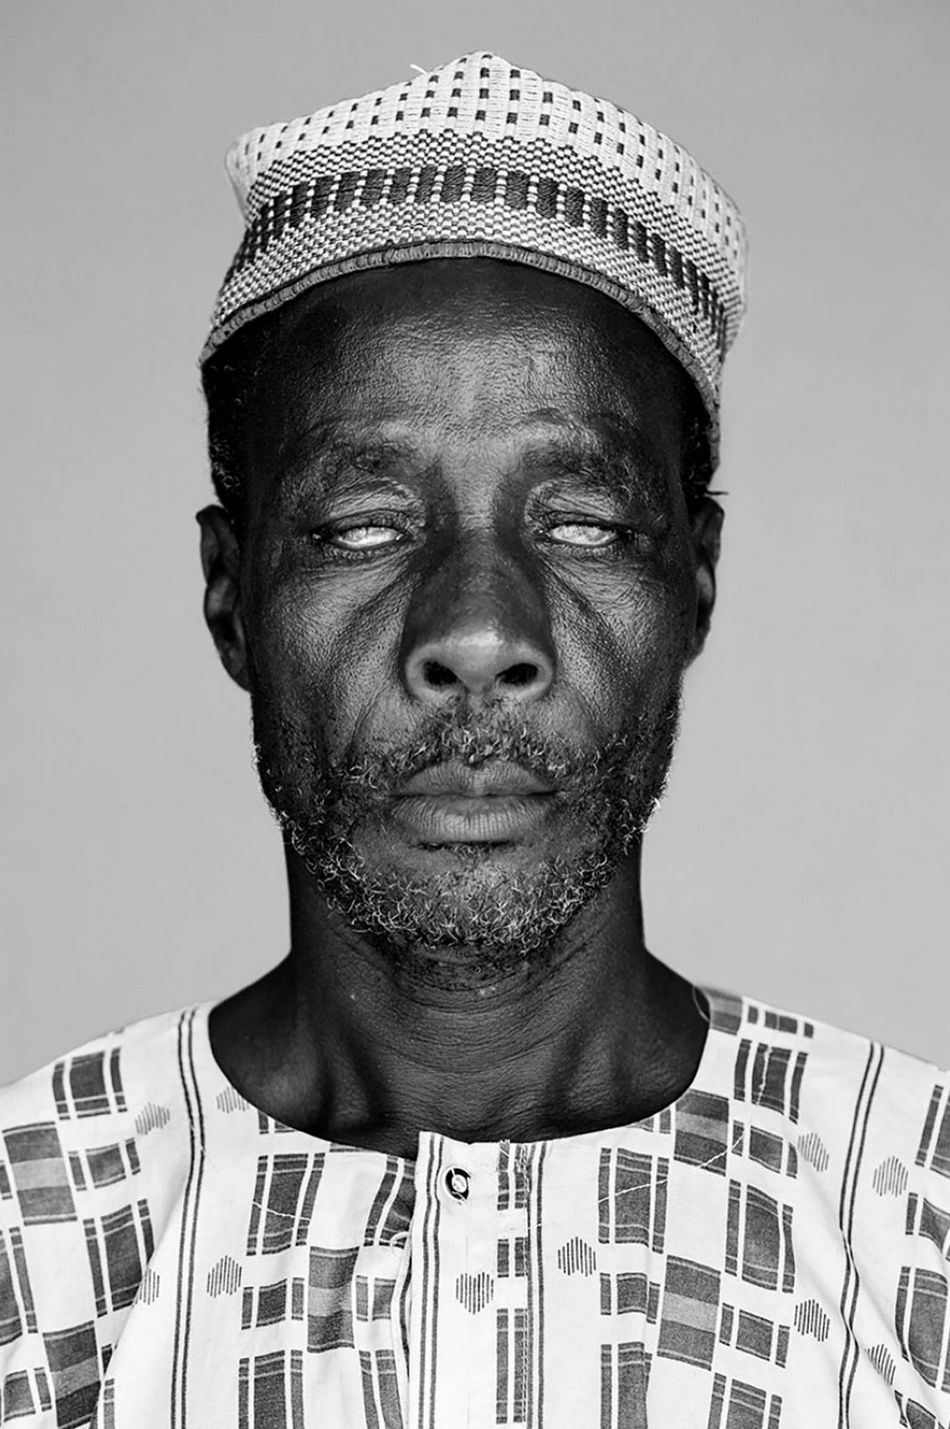 Marcus Trappaud Bjorn и его фотопроект "Африка; Речная слепота"